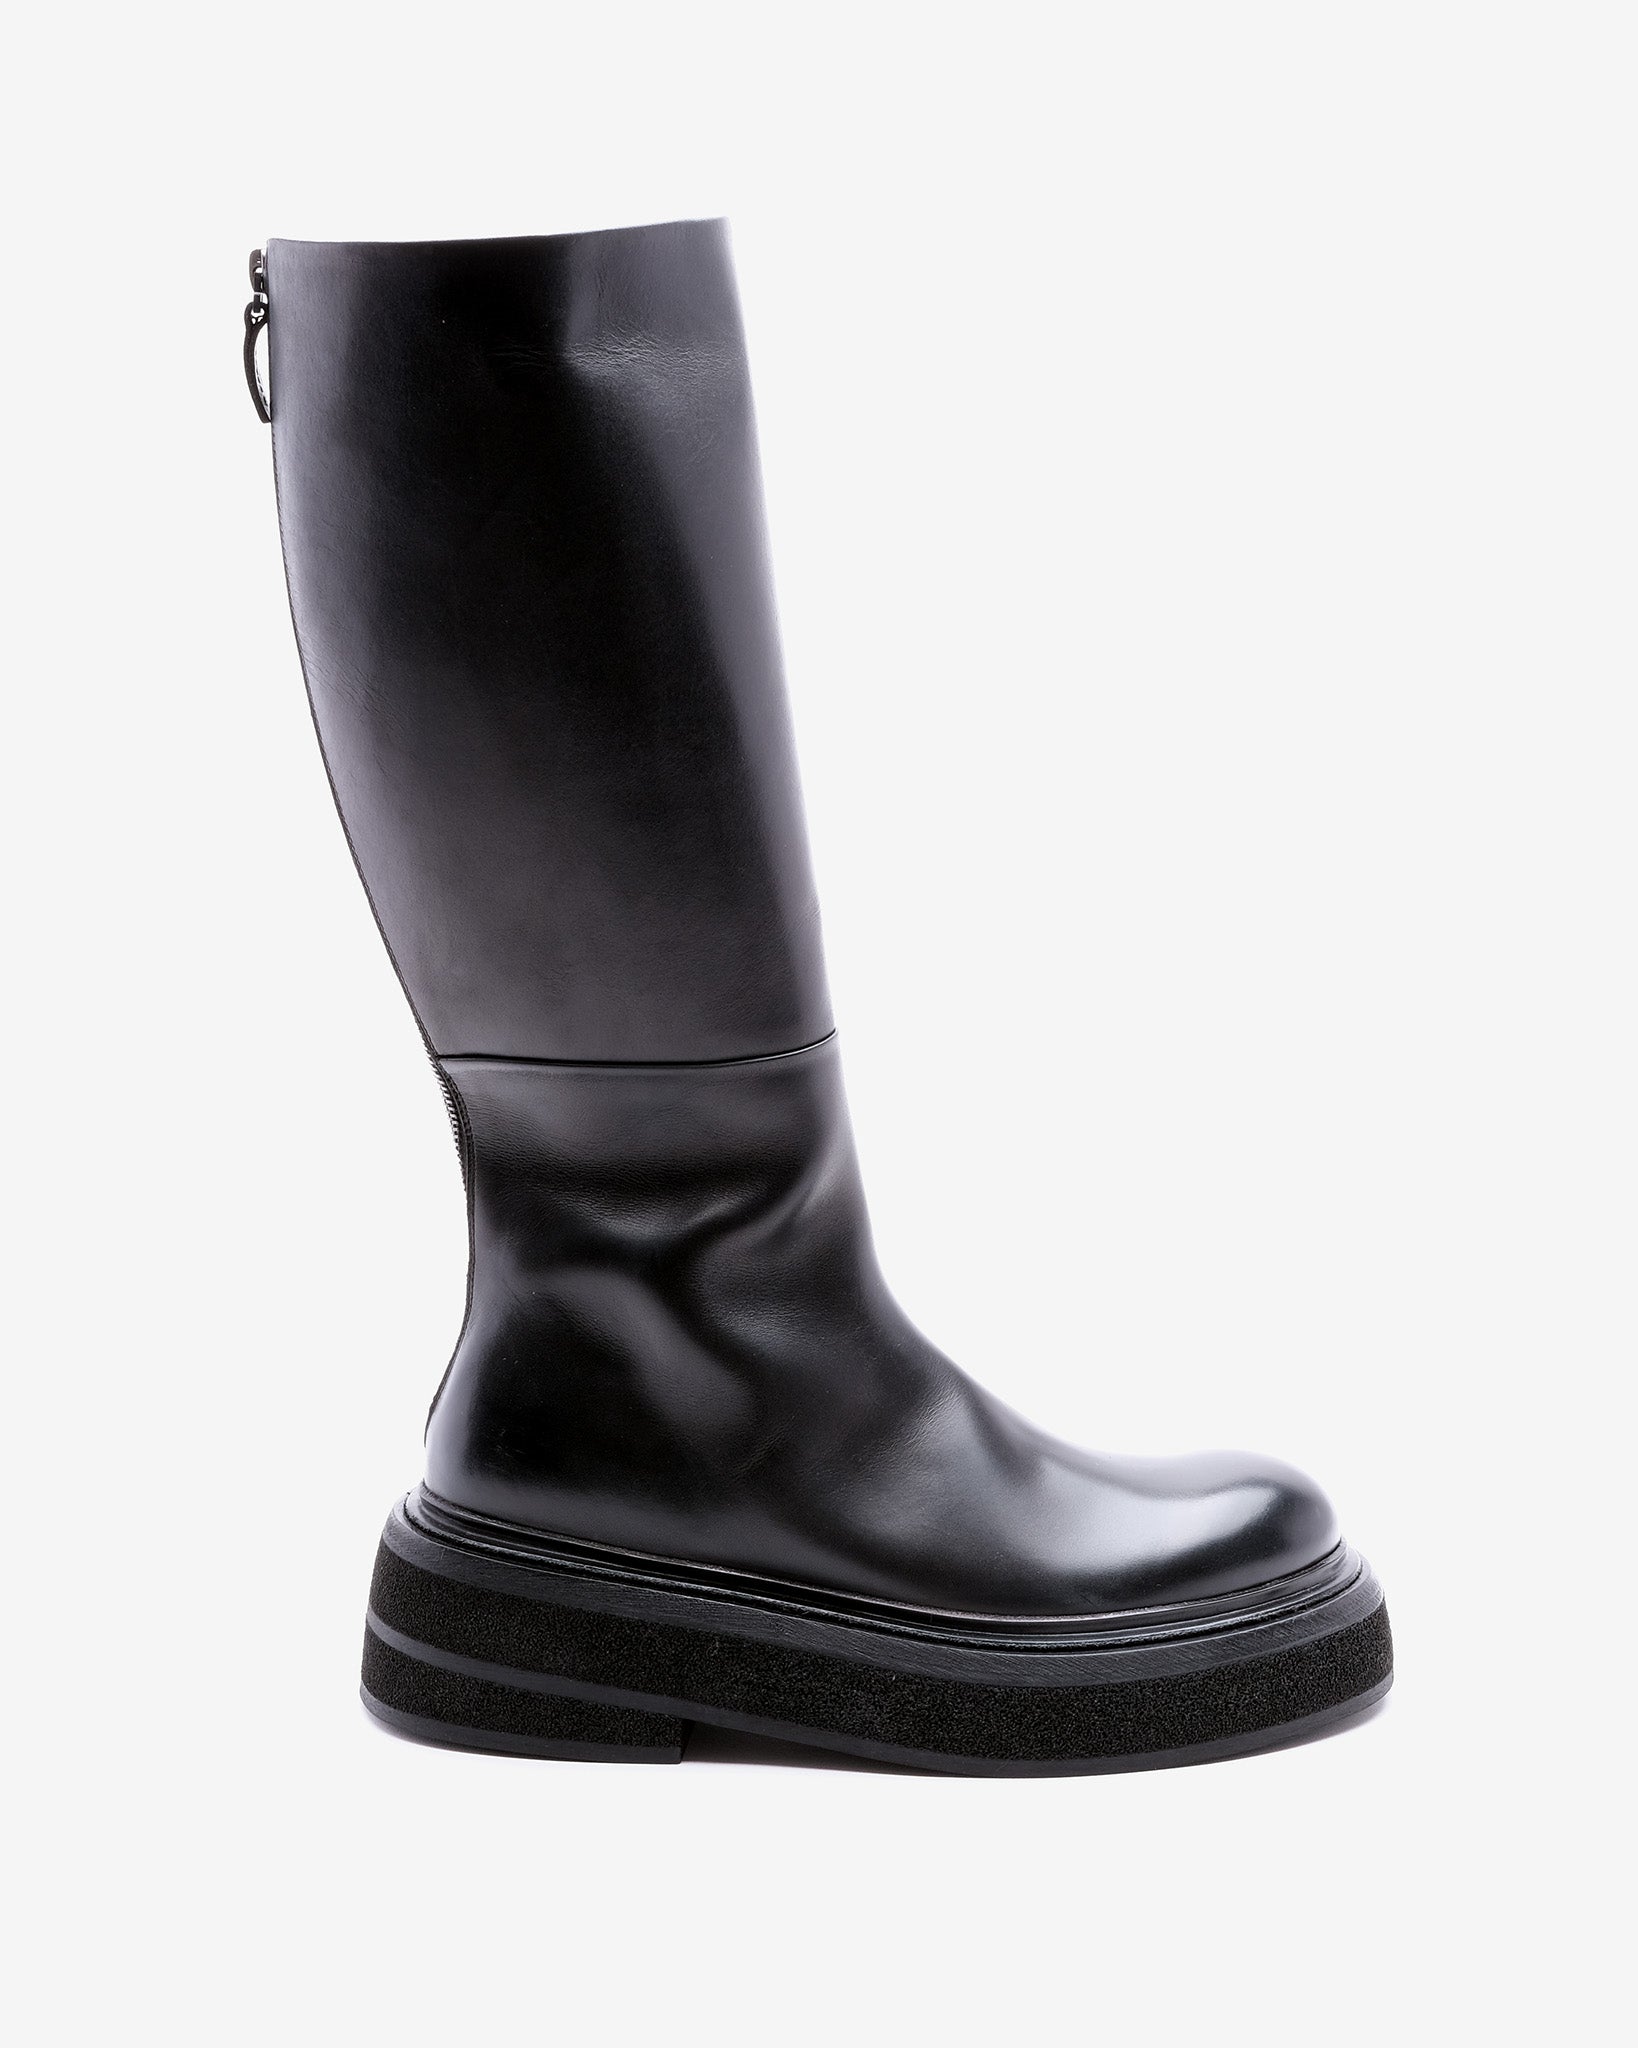 Zuccone MW6541 Black Leather Boots